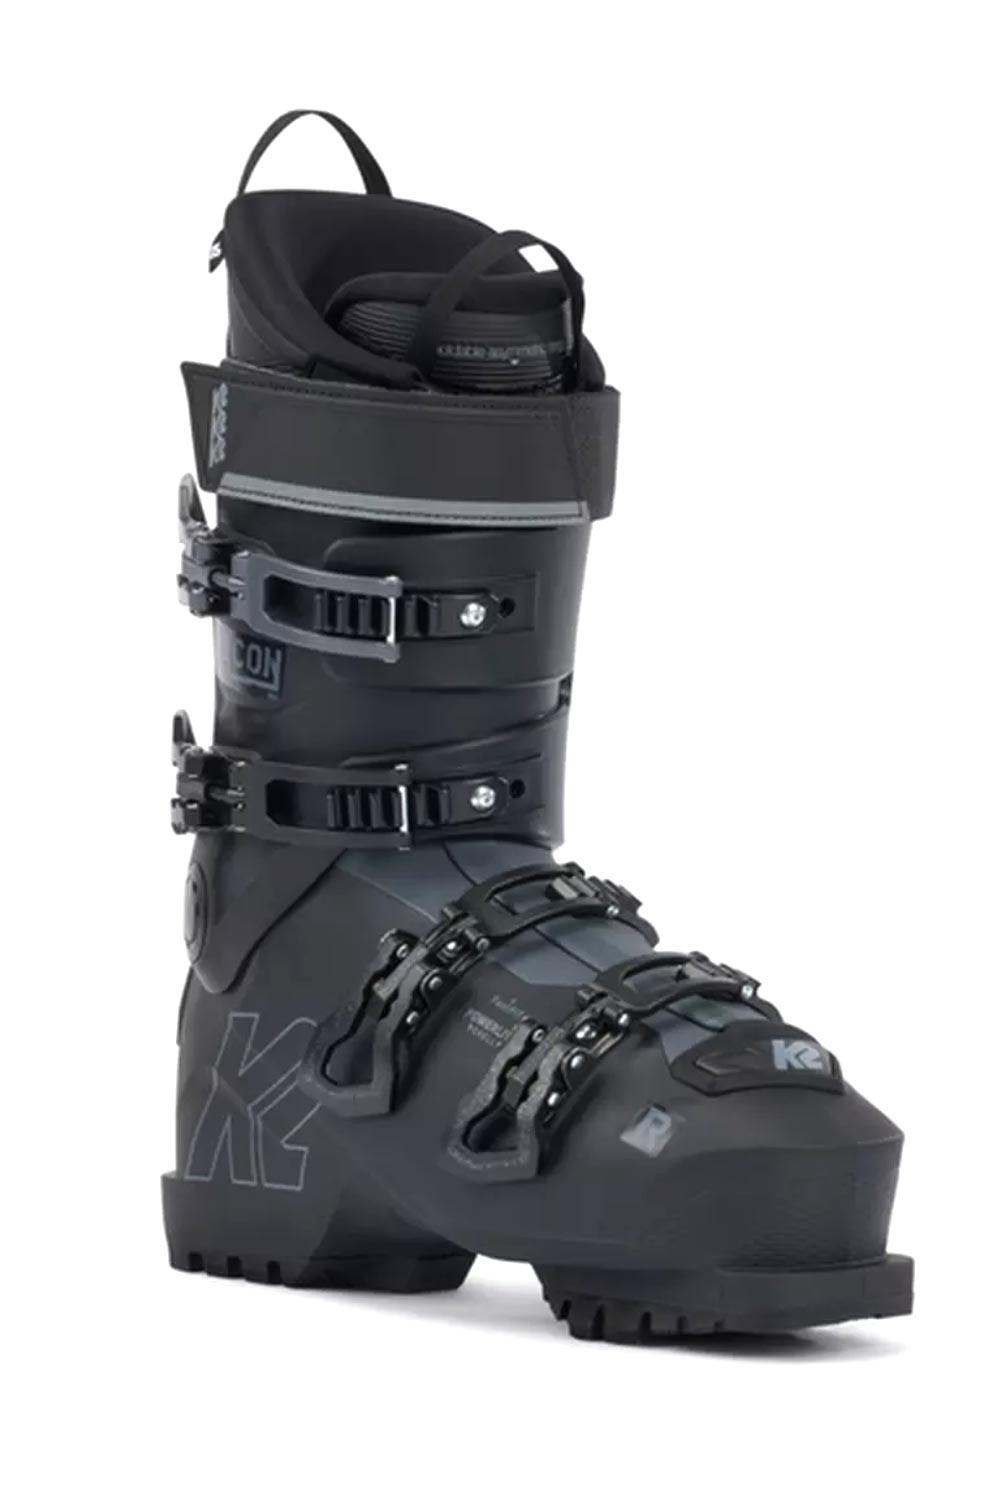 men's K2 Recon 100 ski boots, all black